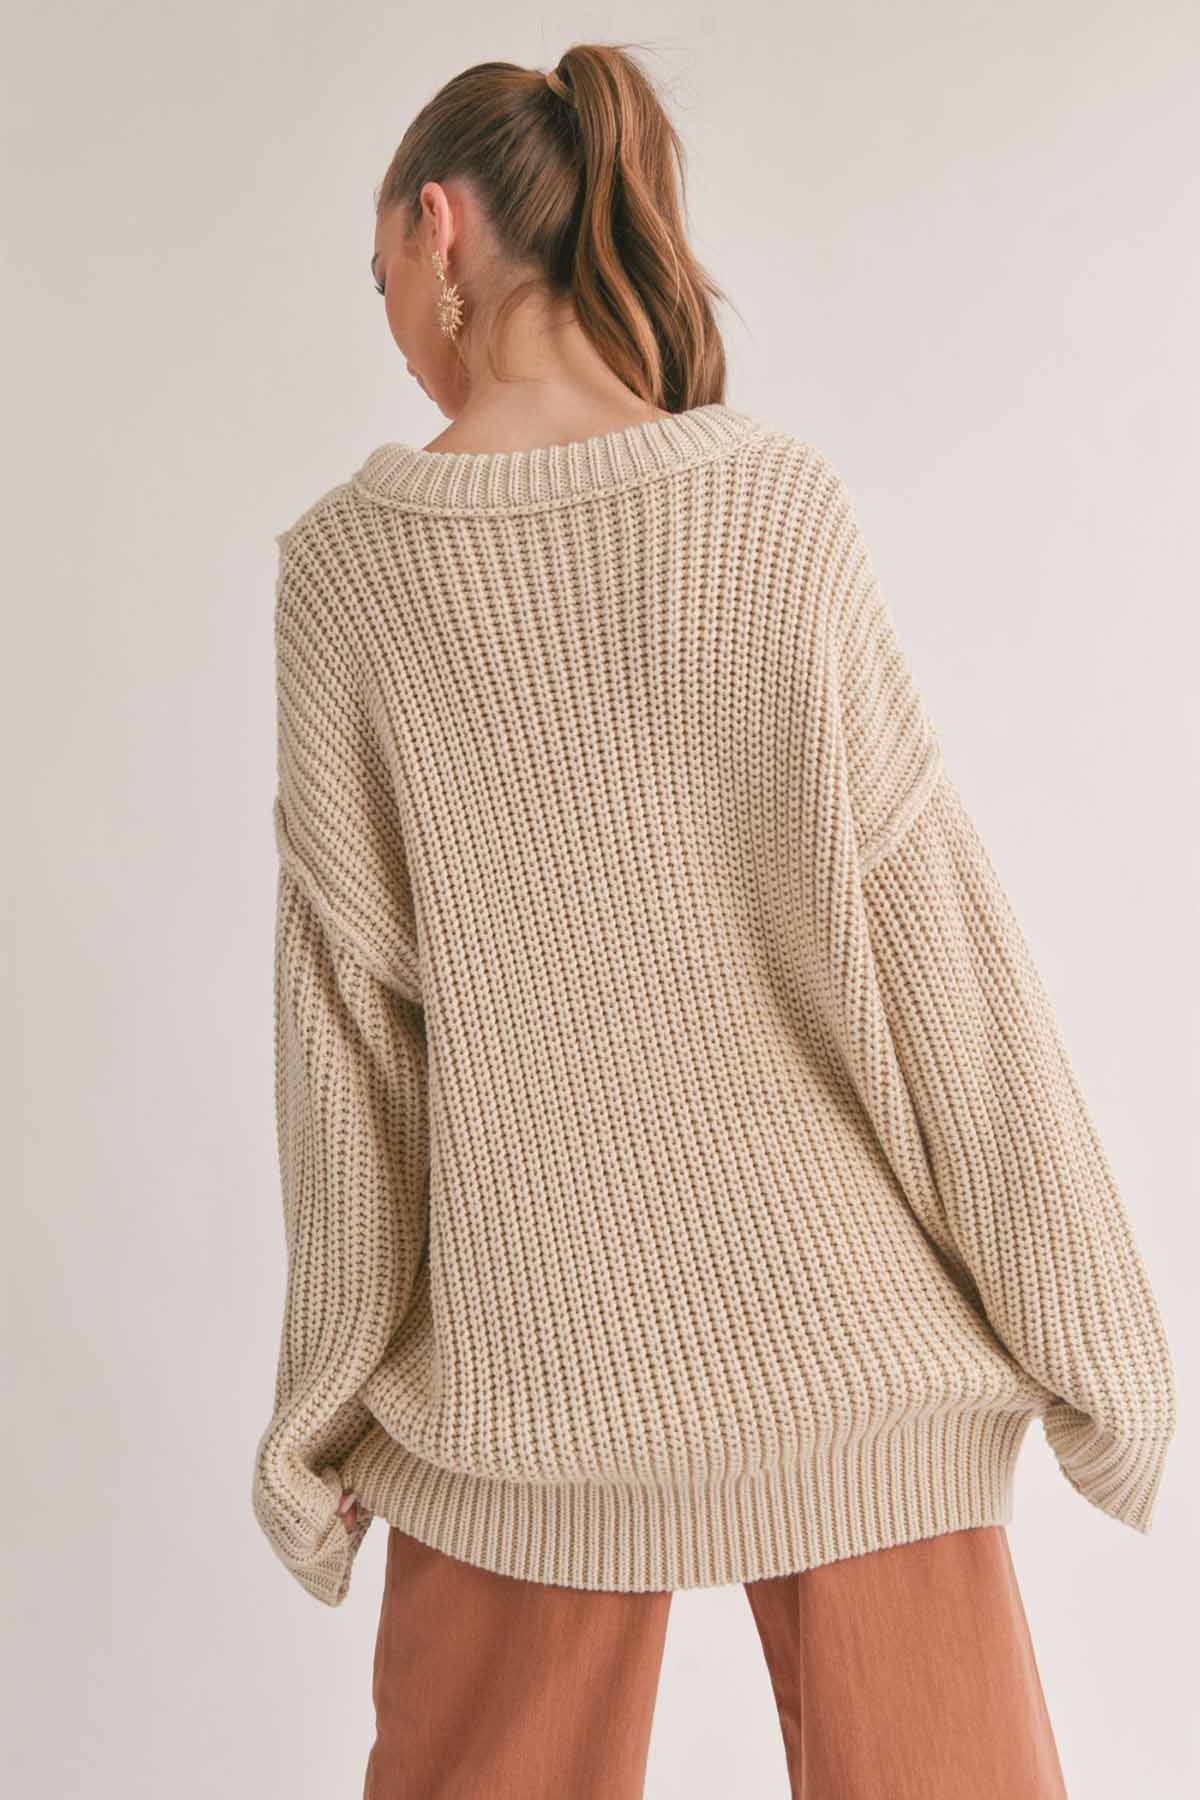 Sage the Label - Kaia Oversized Sweater - Ecru - Back